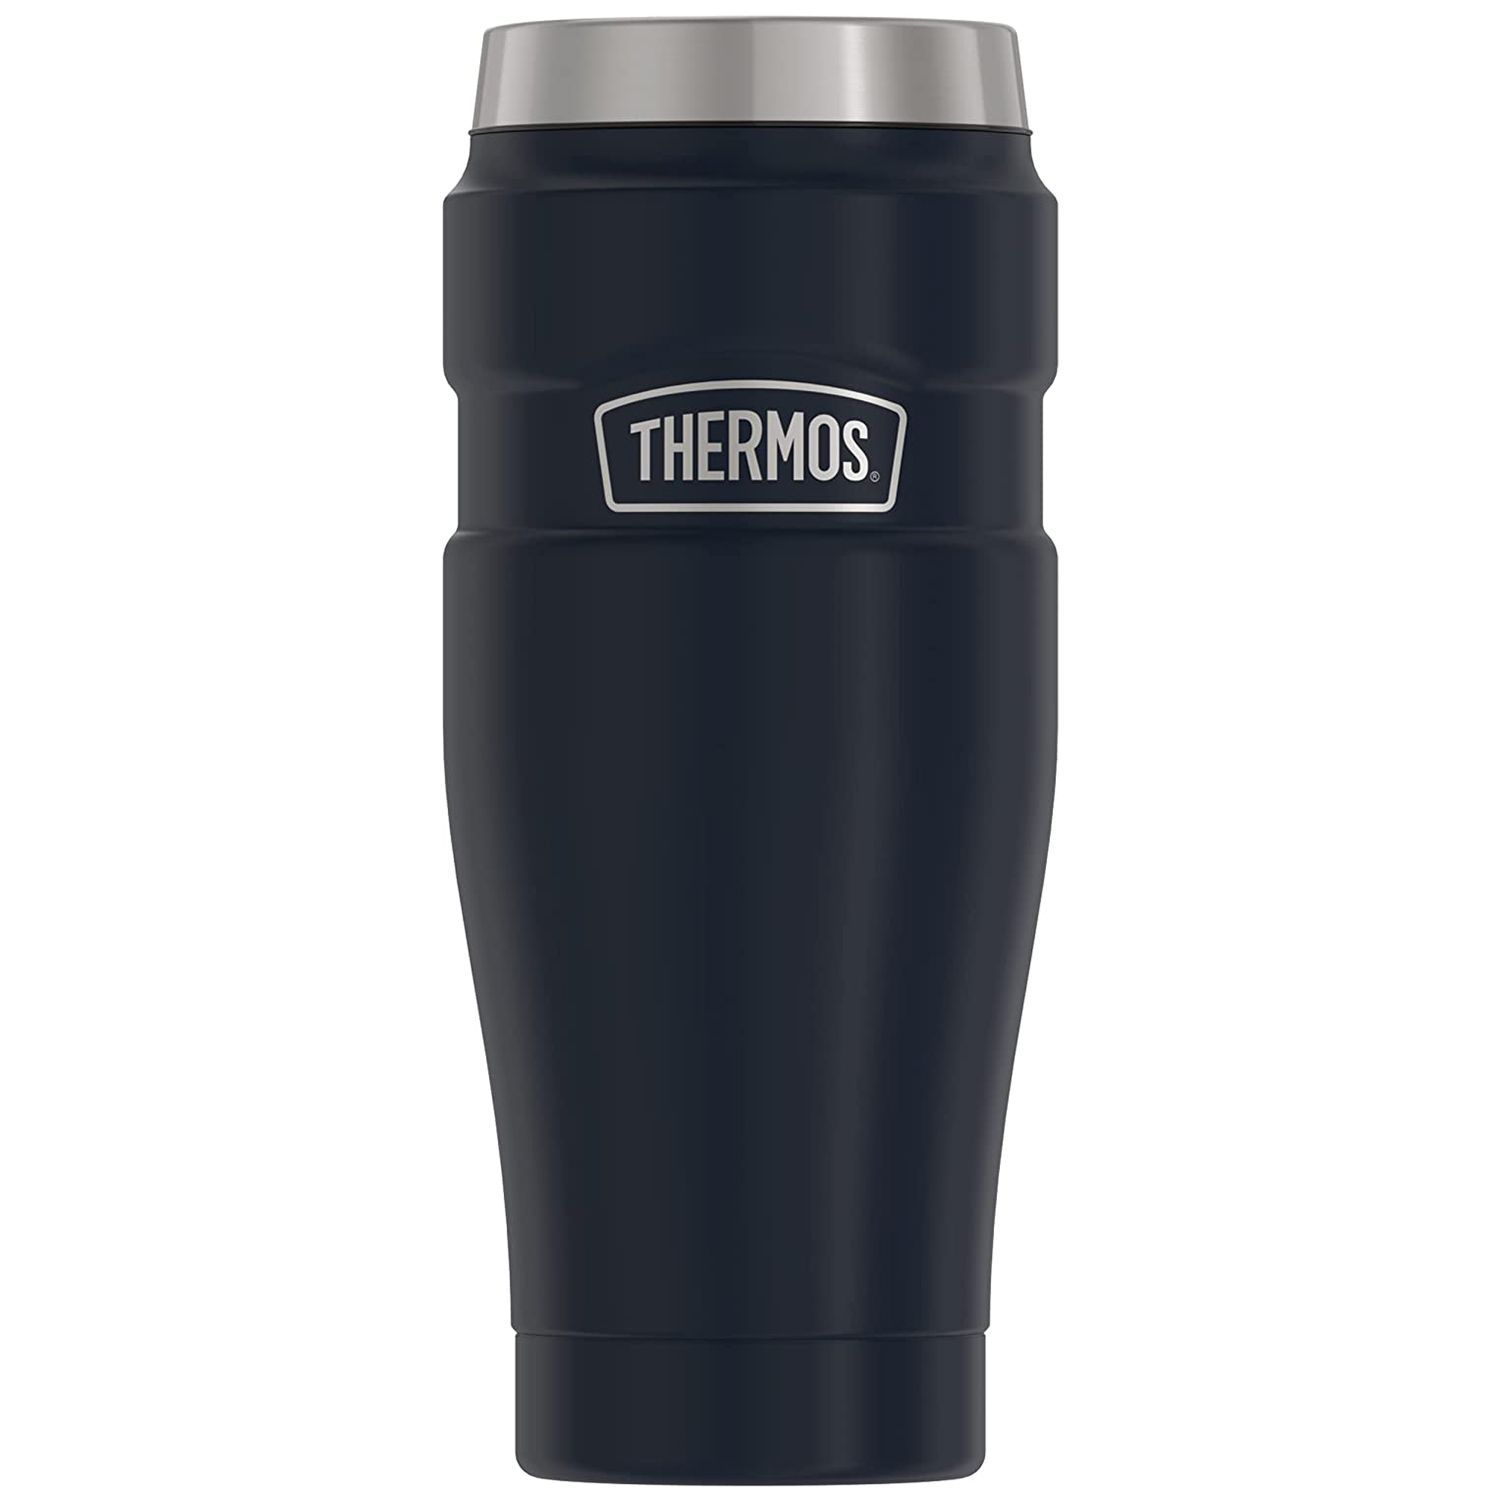 Thermos King Tea Coffee Food Drink Travel Flask Cup Mug Red 